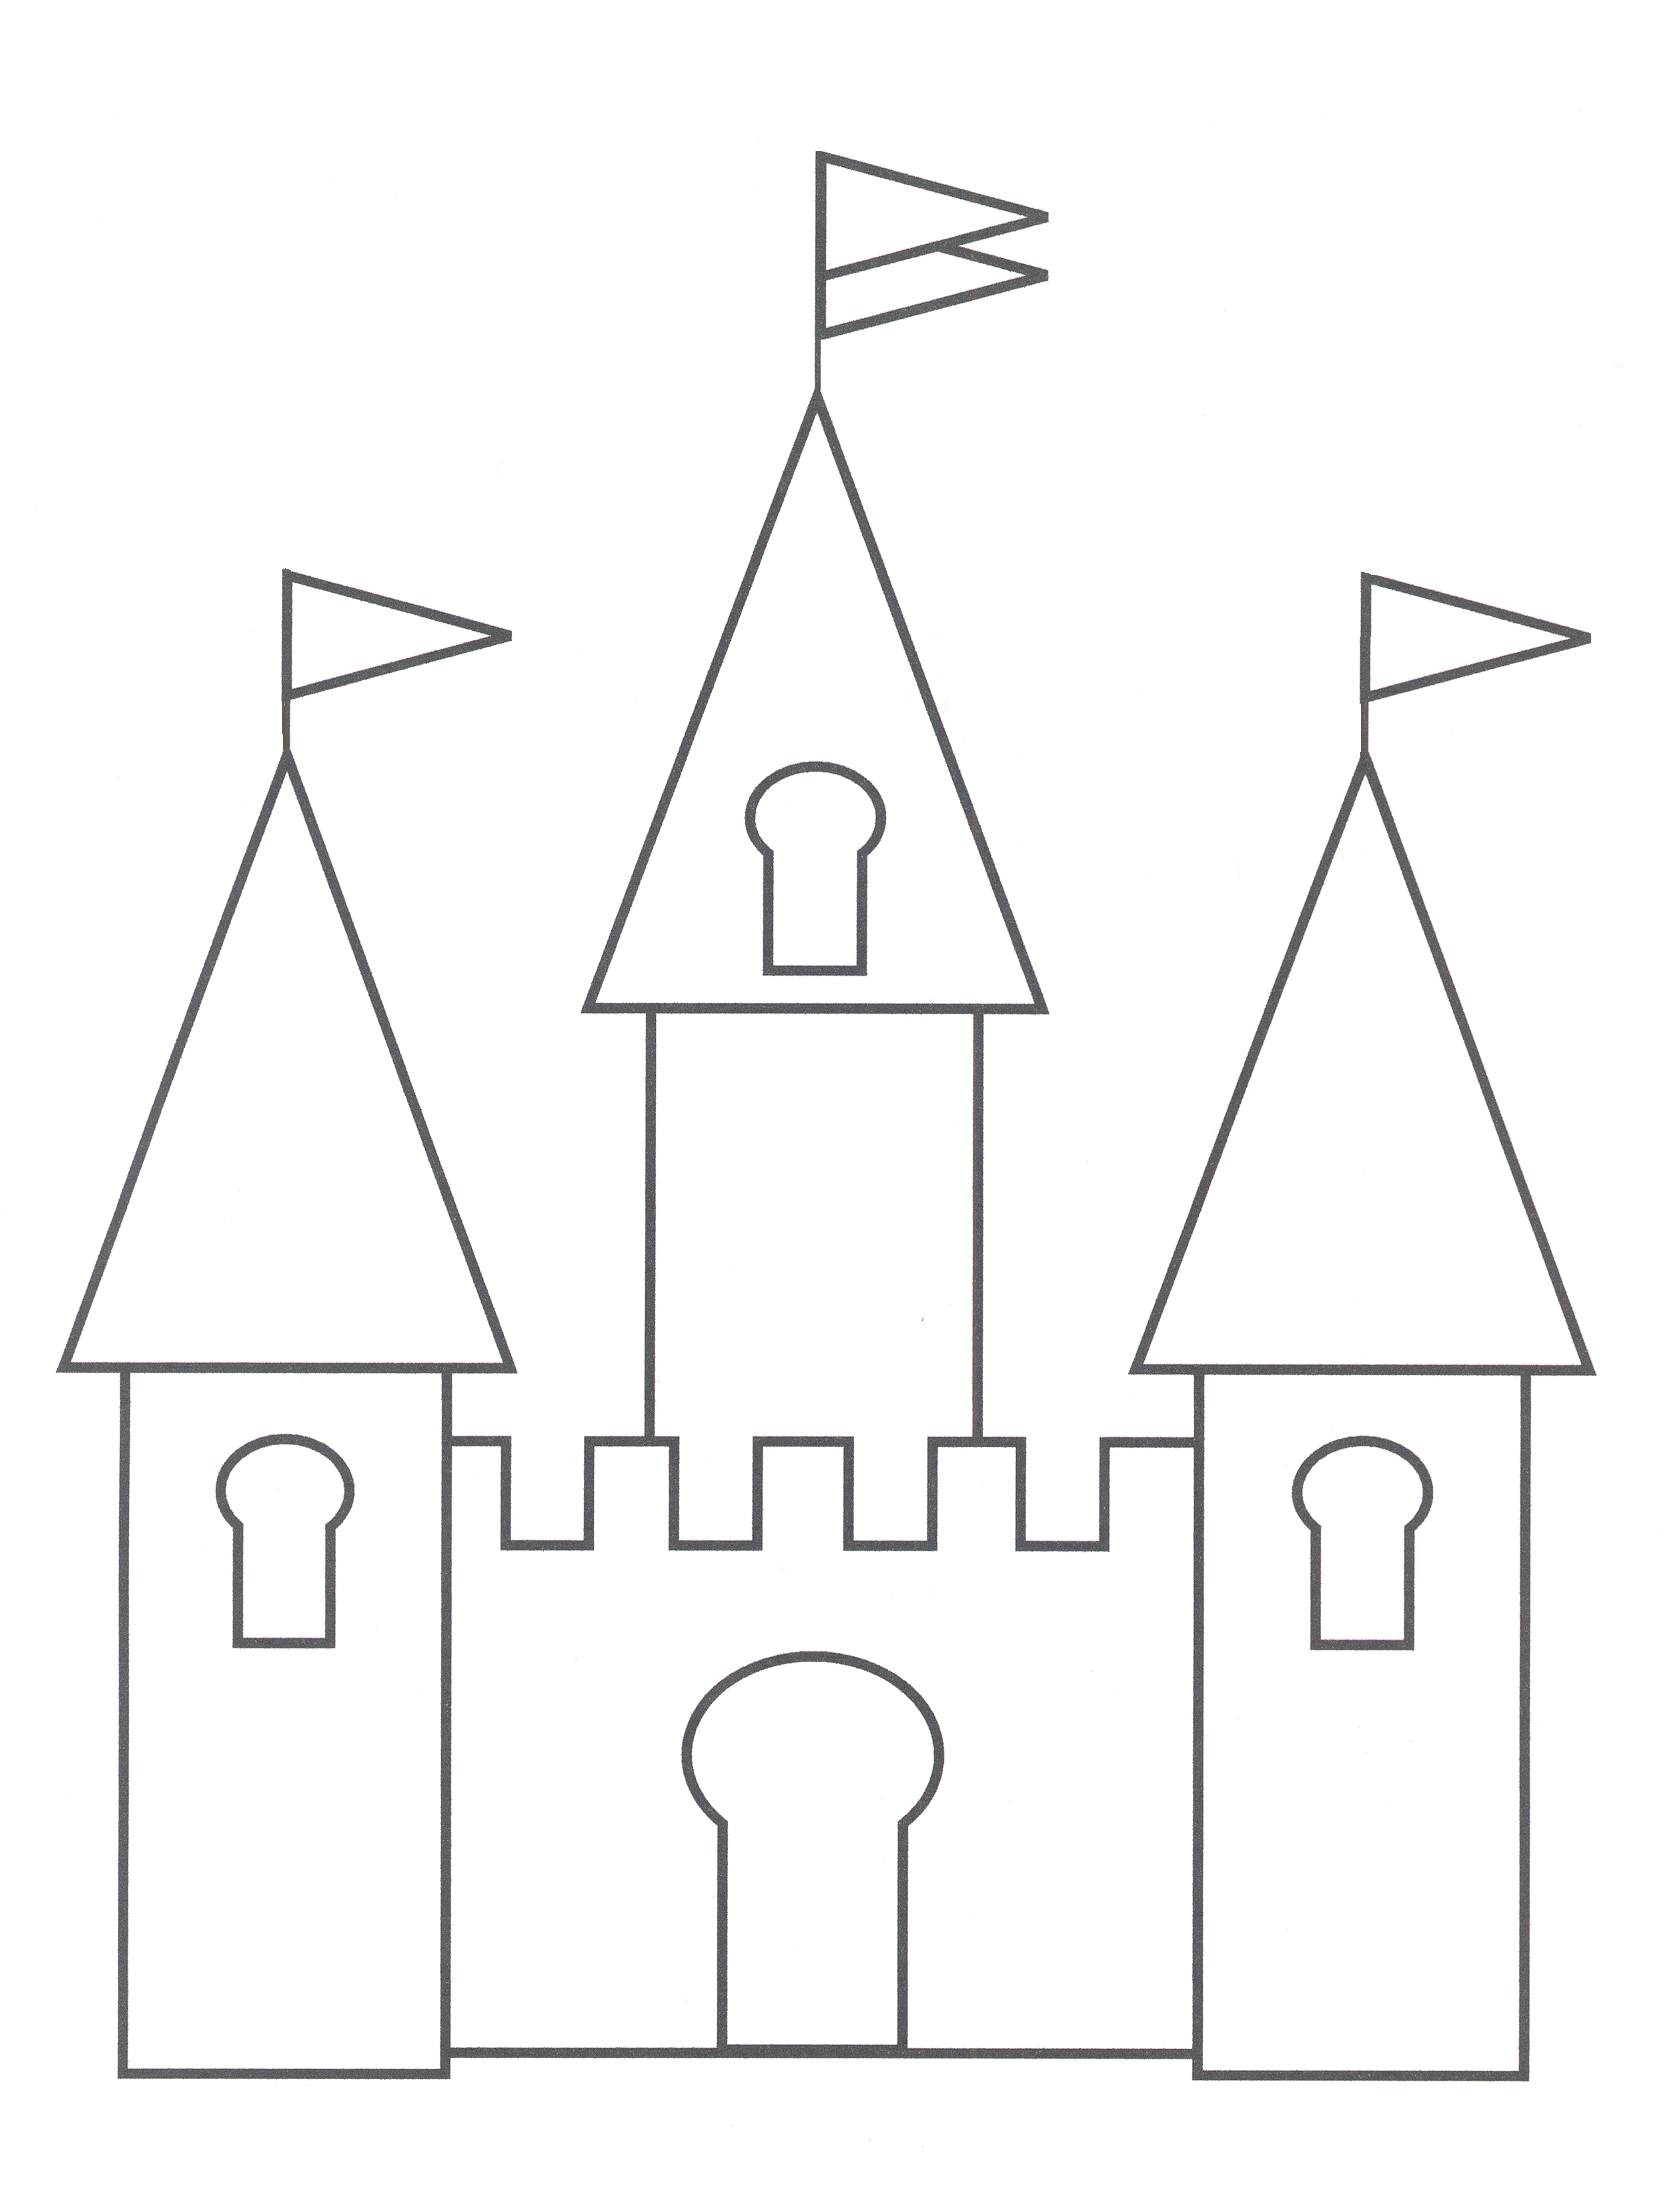 Image #19322 - Coloriage château gratuit